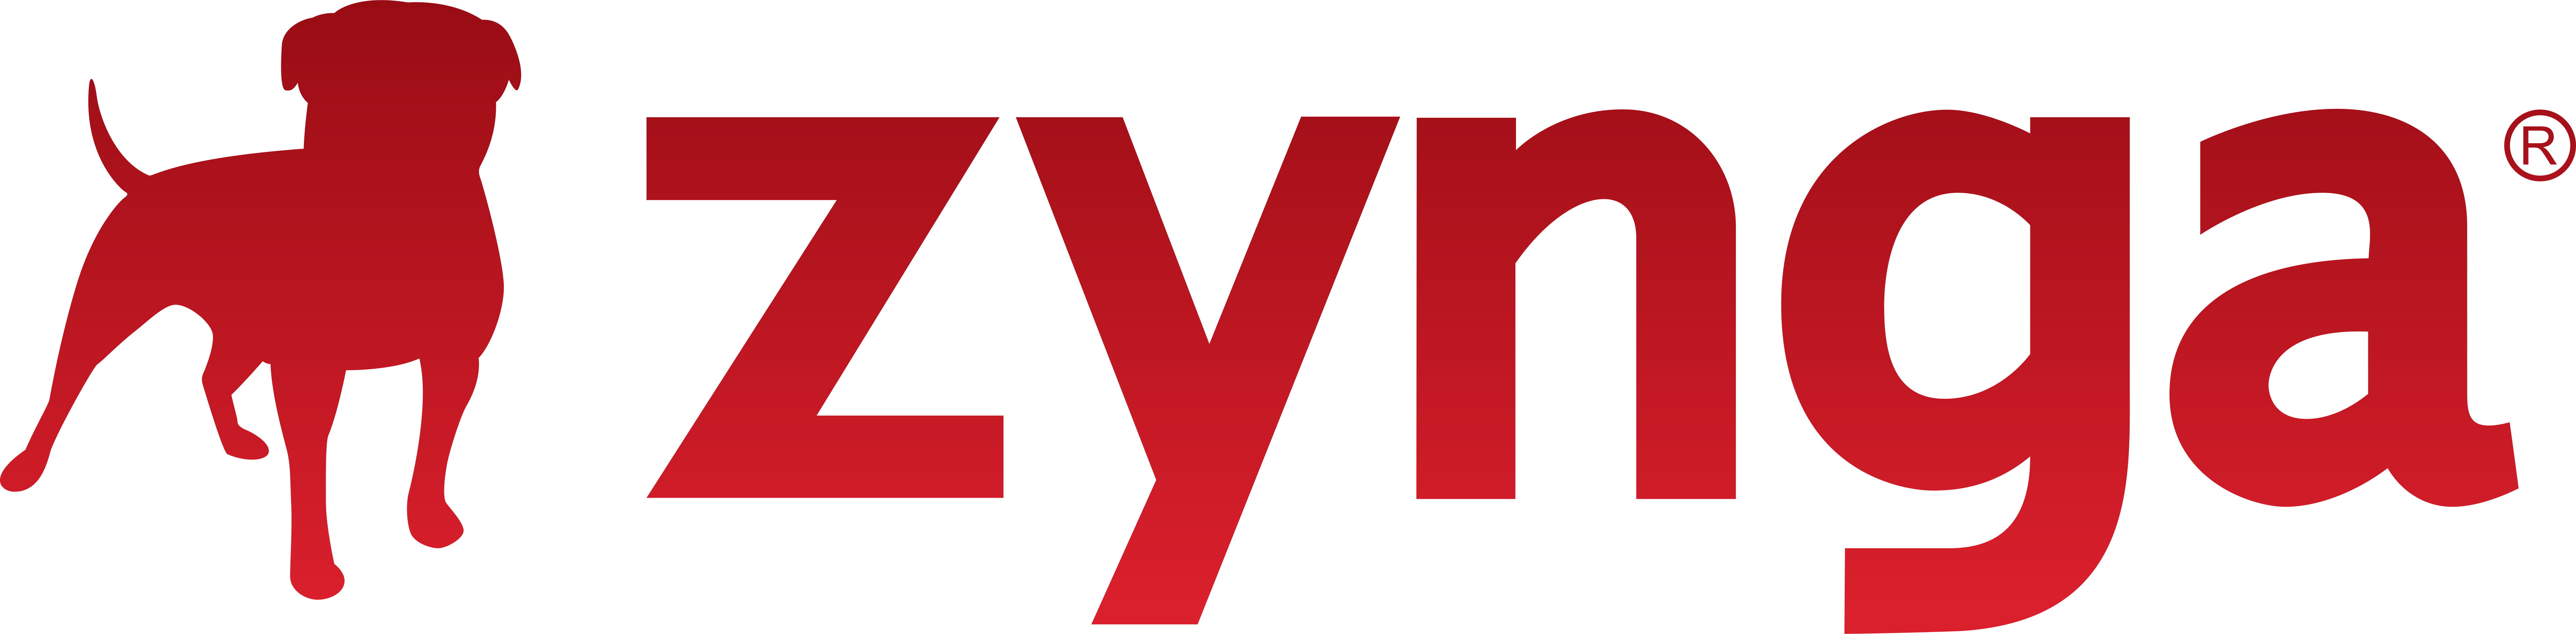 zynga-logo-vector